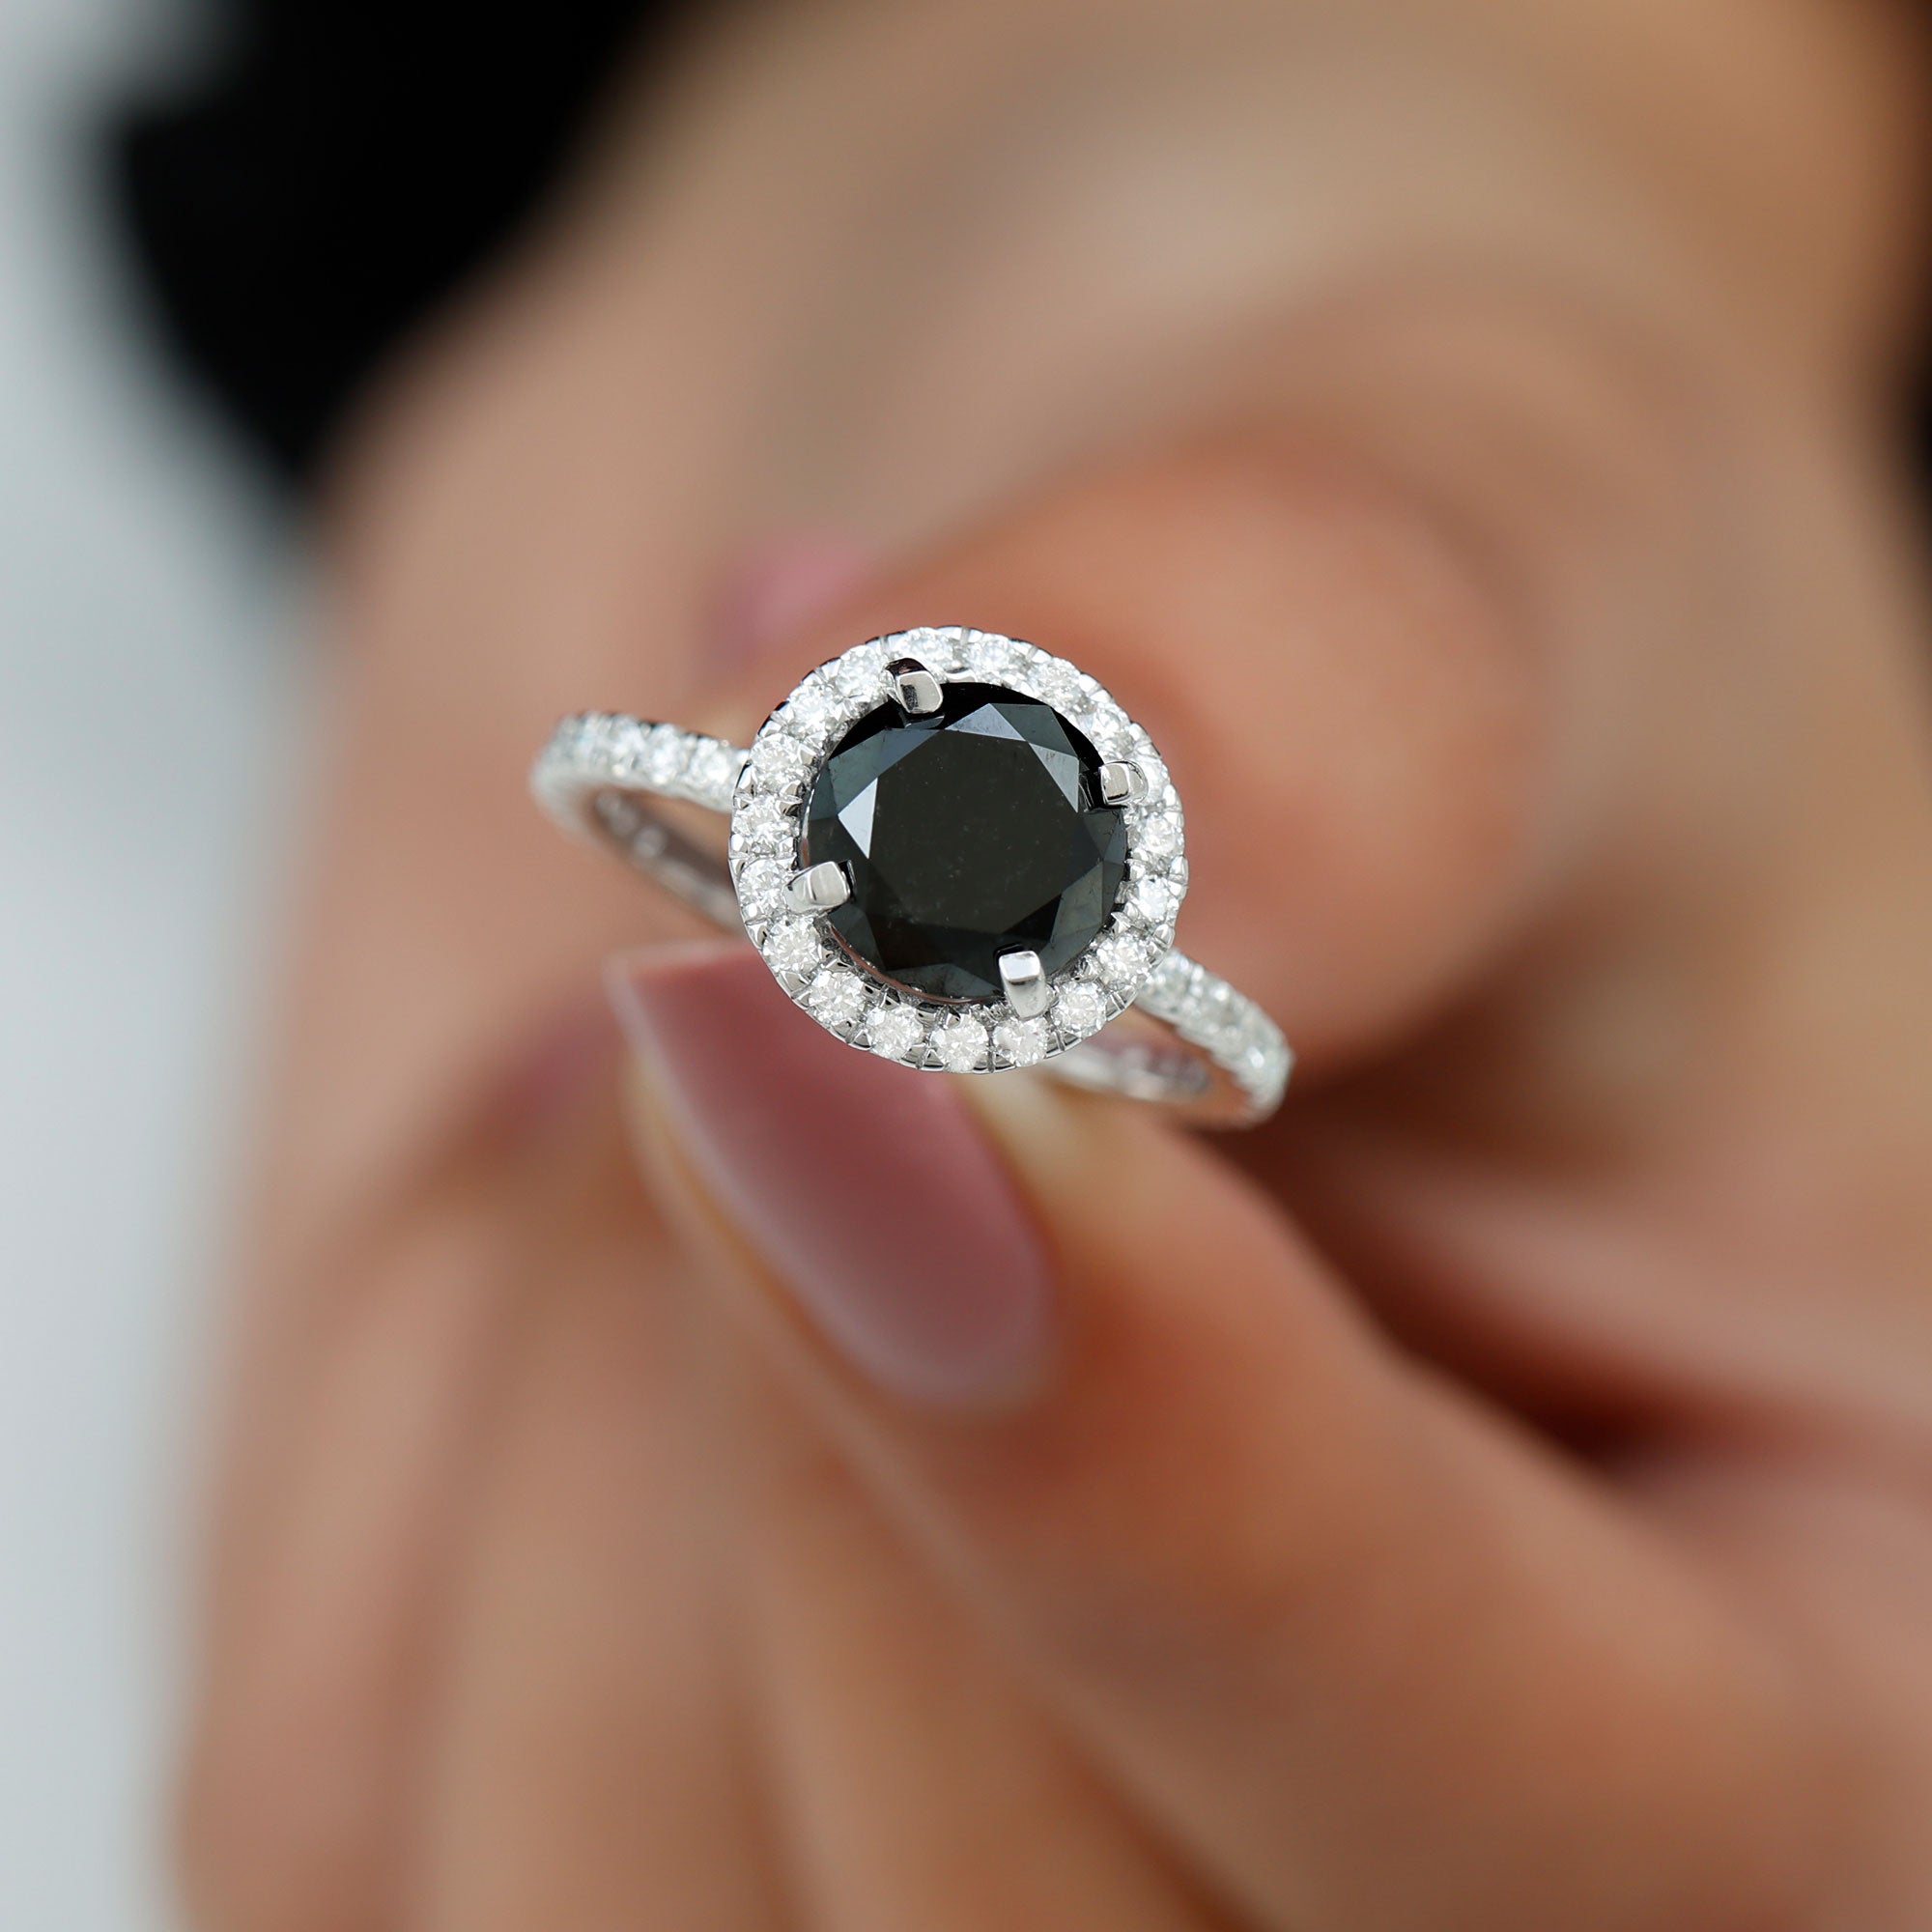 Lab Grown Black Diamond Classic Halo Engagement Ring with Diamond Lab Created Black Diamond - ( AAAA ) - Quality - Rosec Jewels